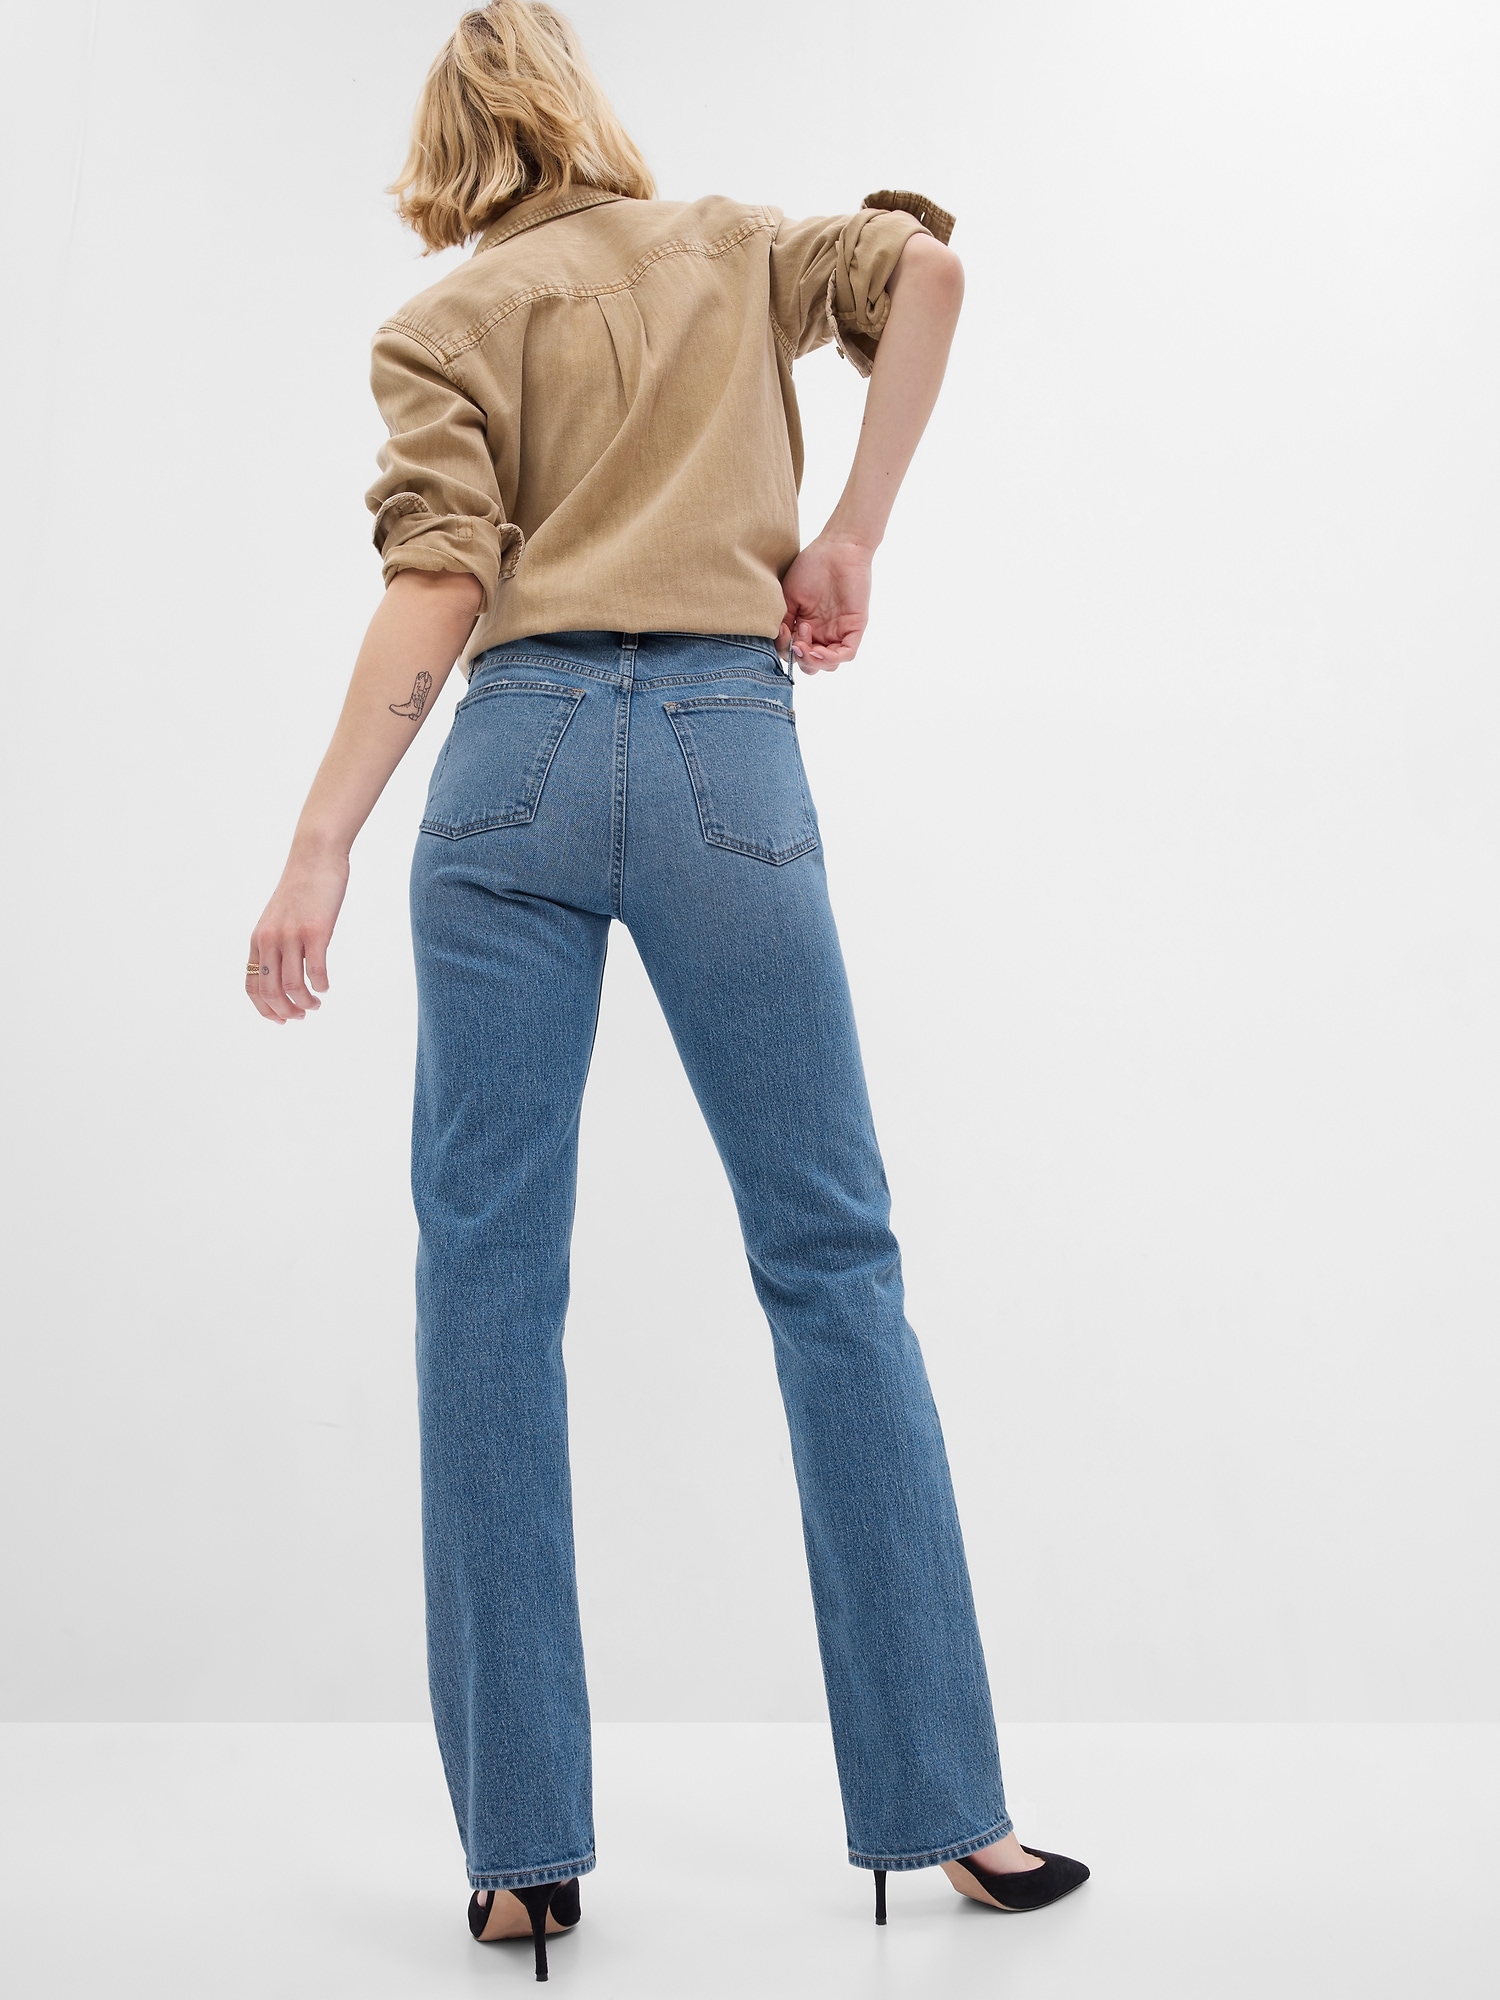 ’90s Straight Jeans | Gap